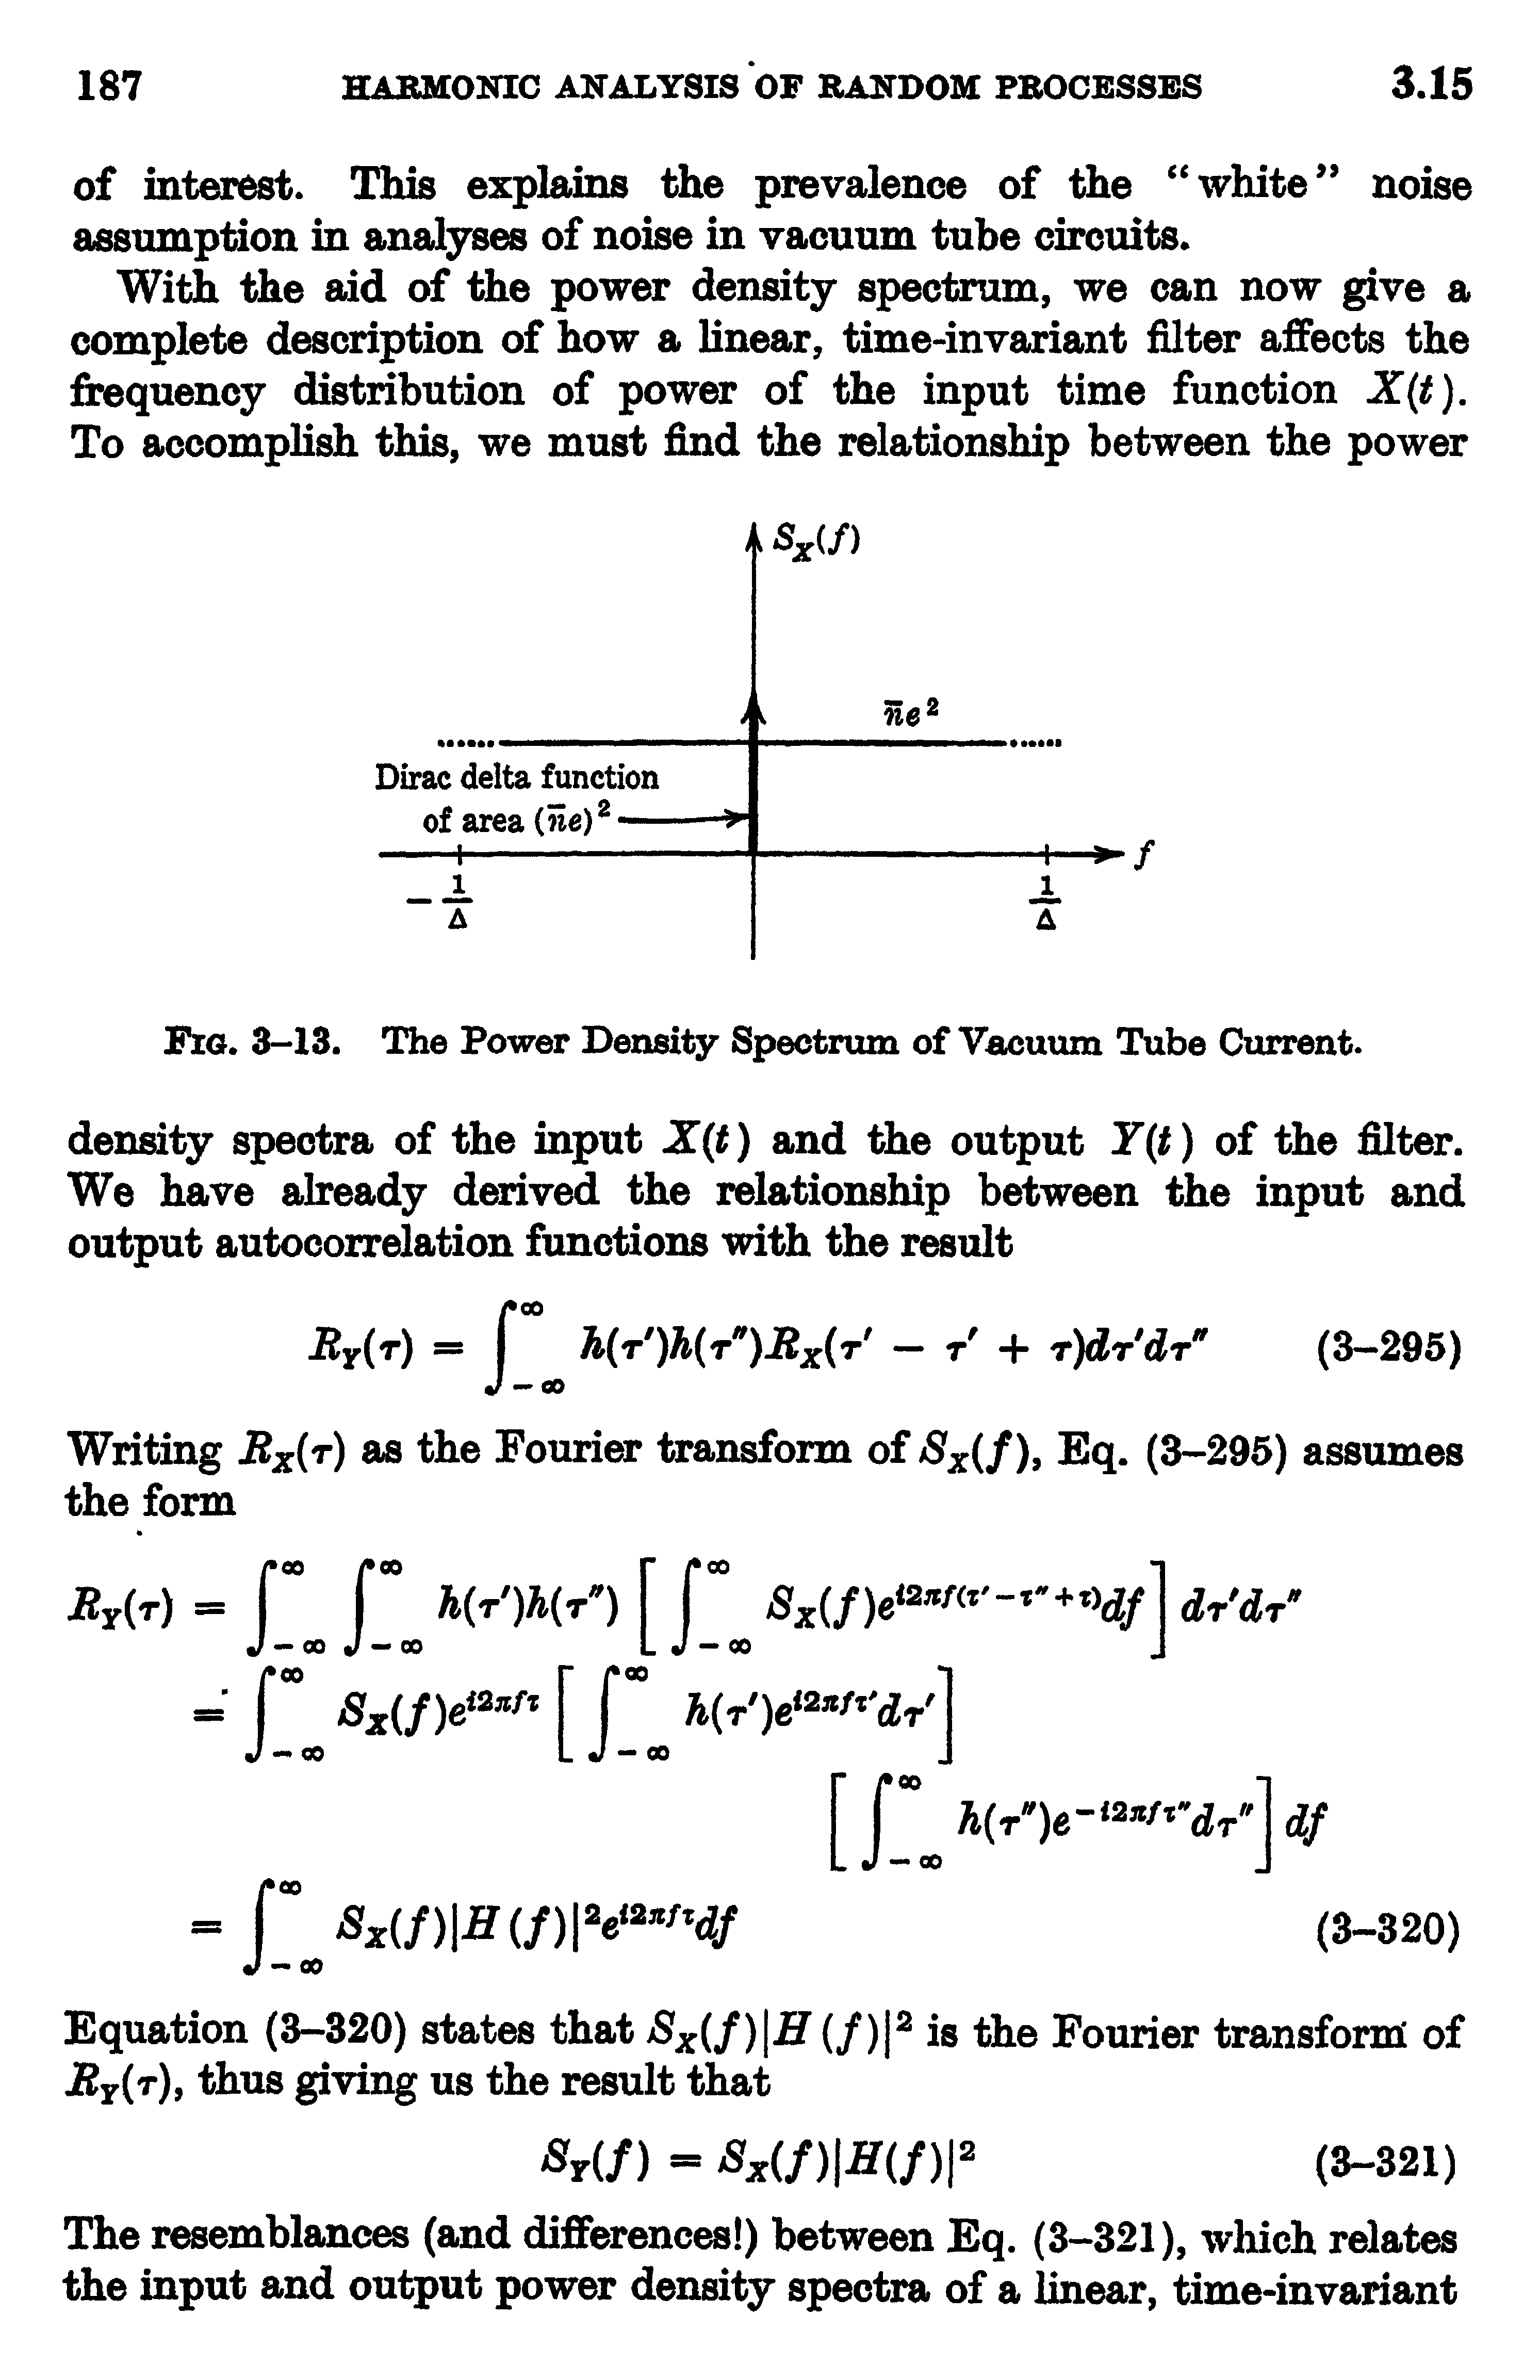 Fig. 3-13. The Power Density Spectrum of Vacuum Tube Current.